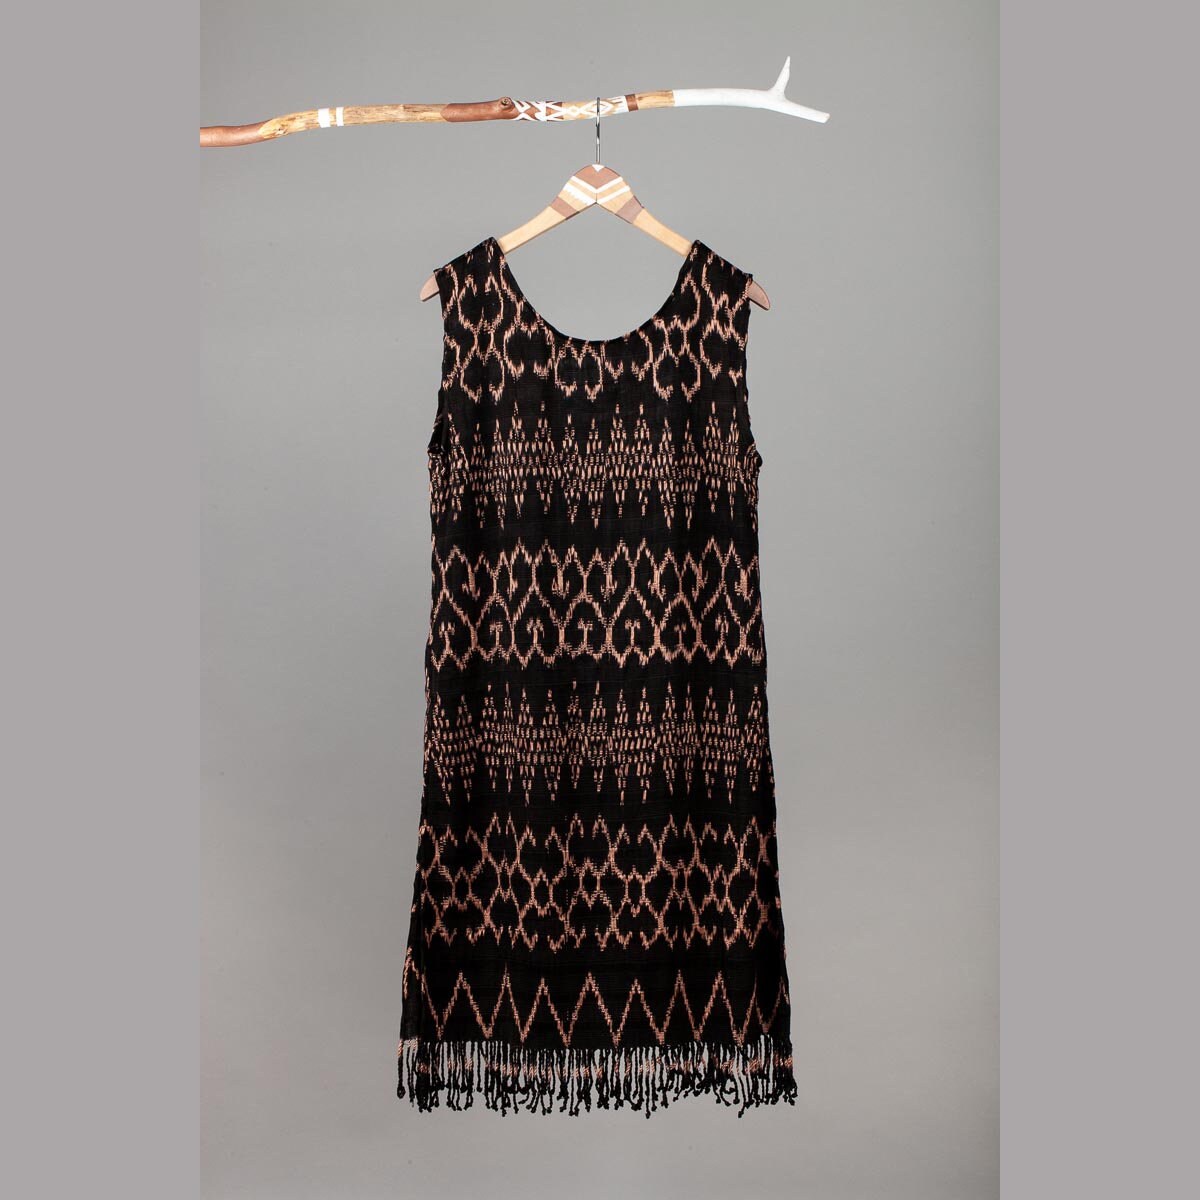 Light black *Jaspe* dress, made of ultra-soft viscose, UNIKAT, spring, handwoven ikat from Guatemala, made in Germany, summer dress